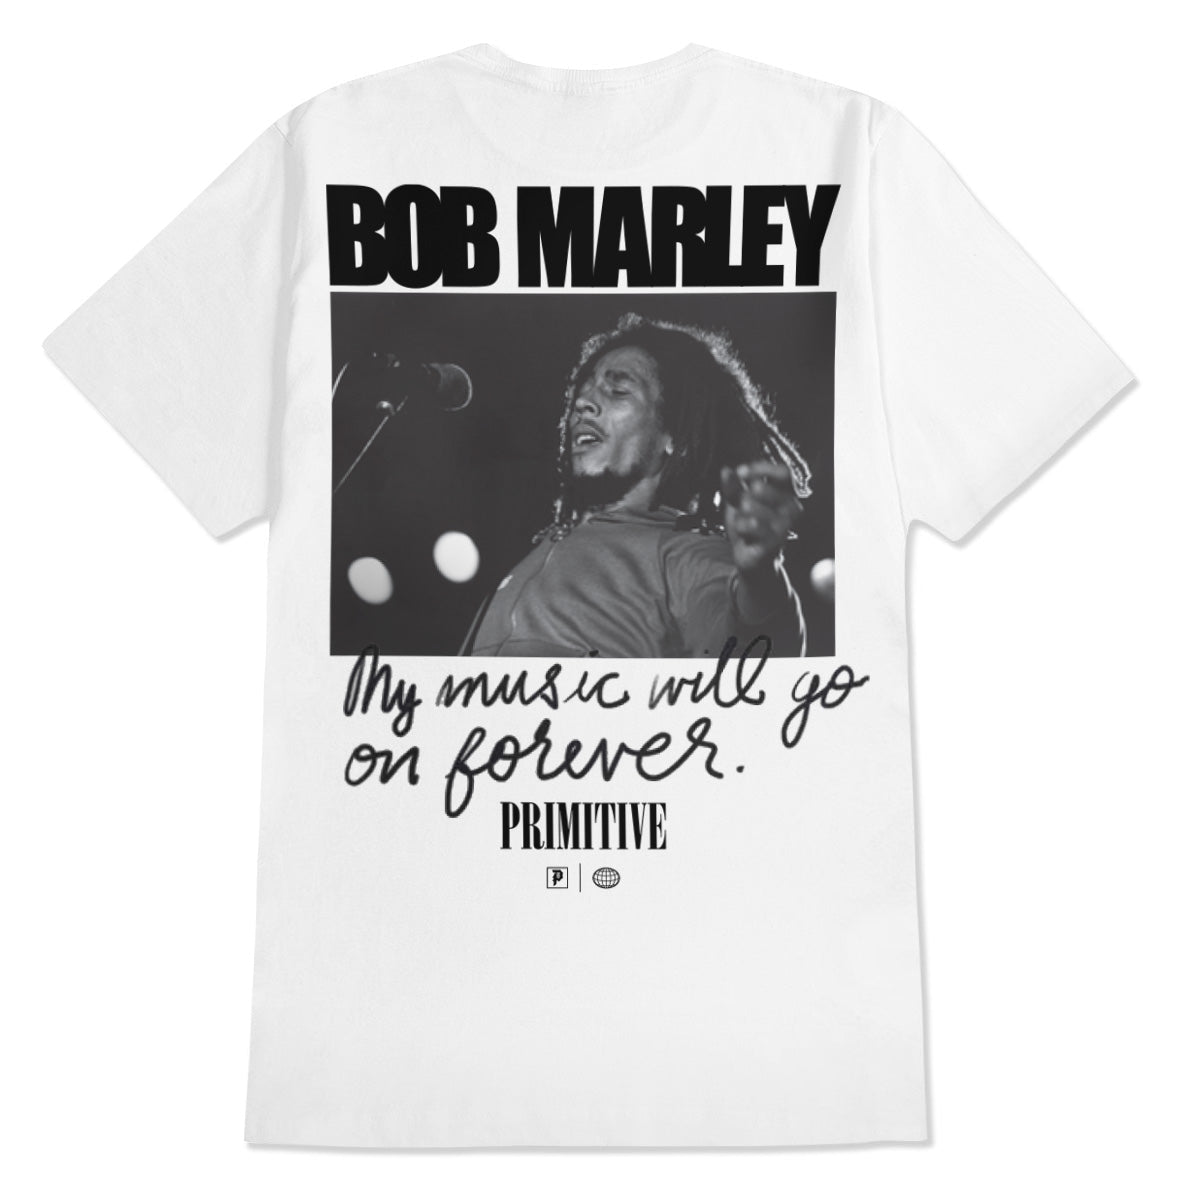 Primitive x Bob Marley Forever T-Shirt - White image 1